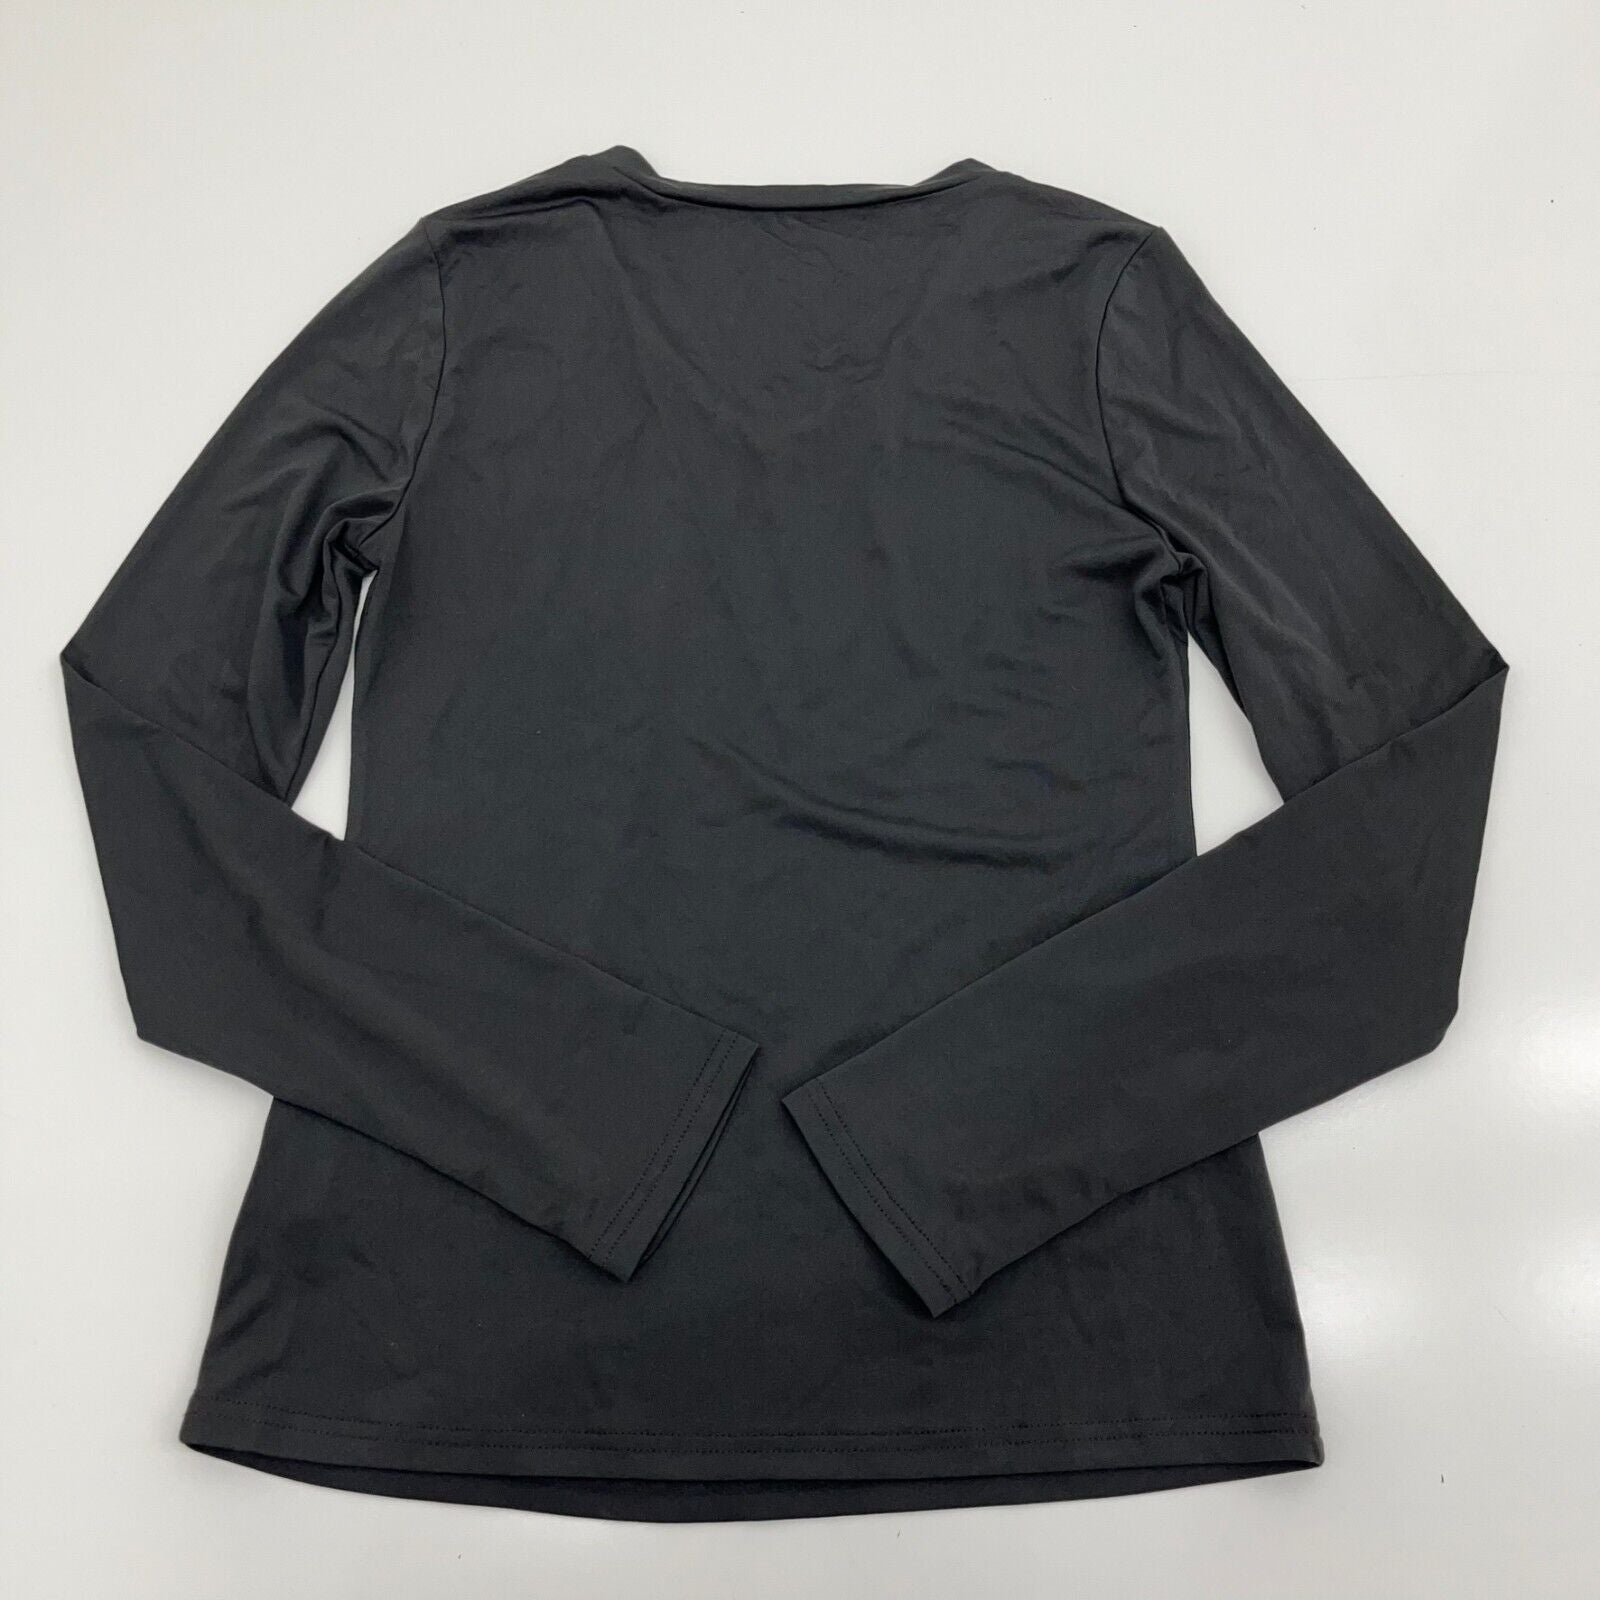 ViCherub Womens Black Long Sleeve Athletic Shirt Size XXL - beyond exchange